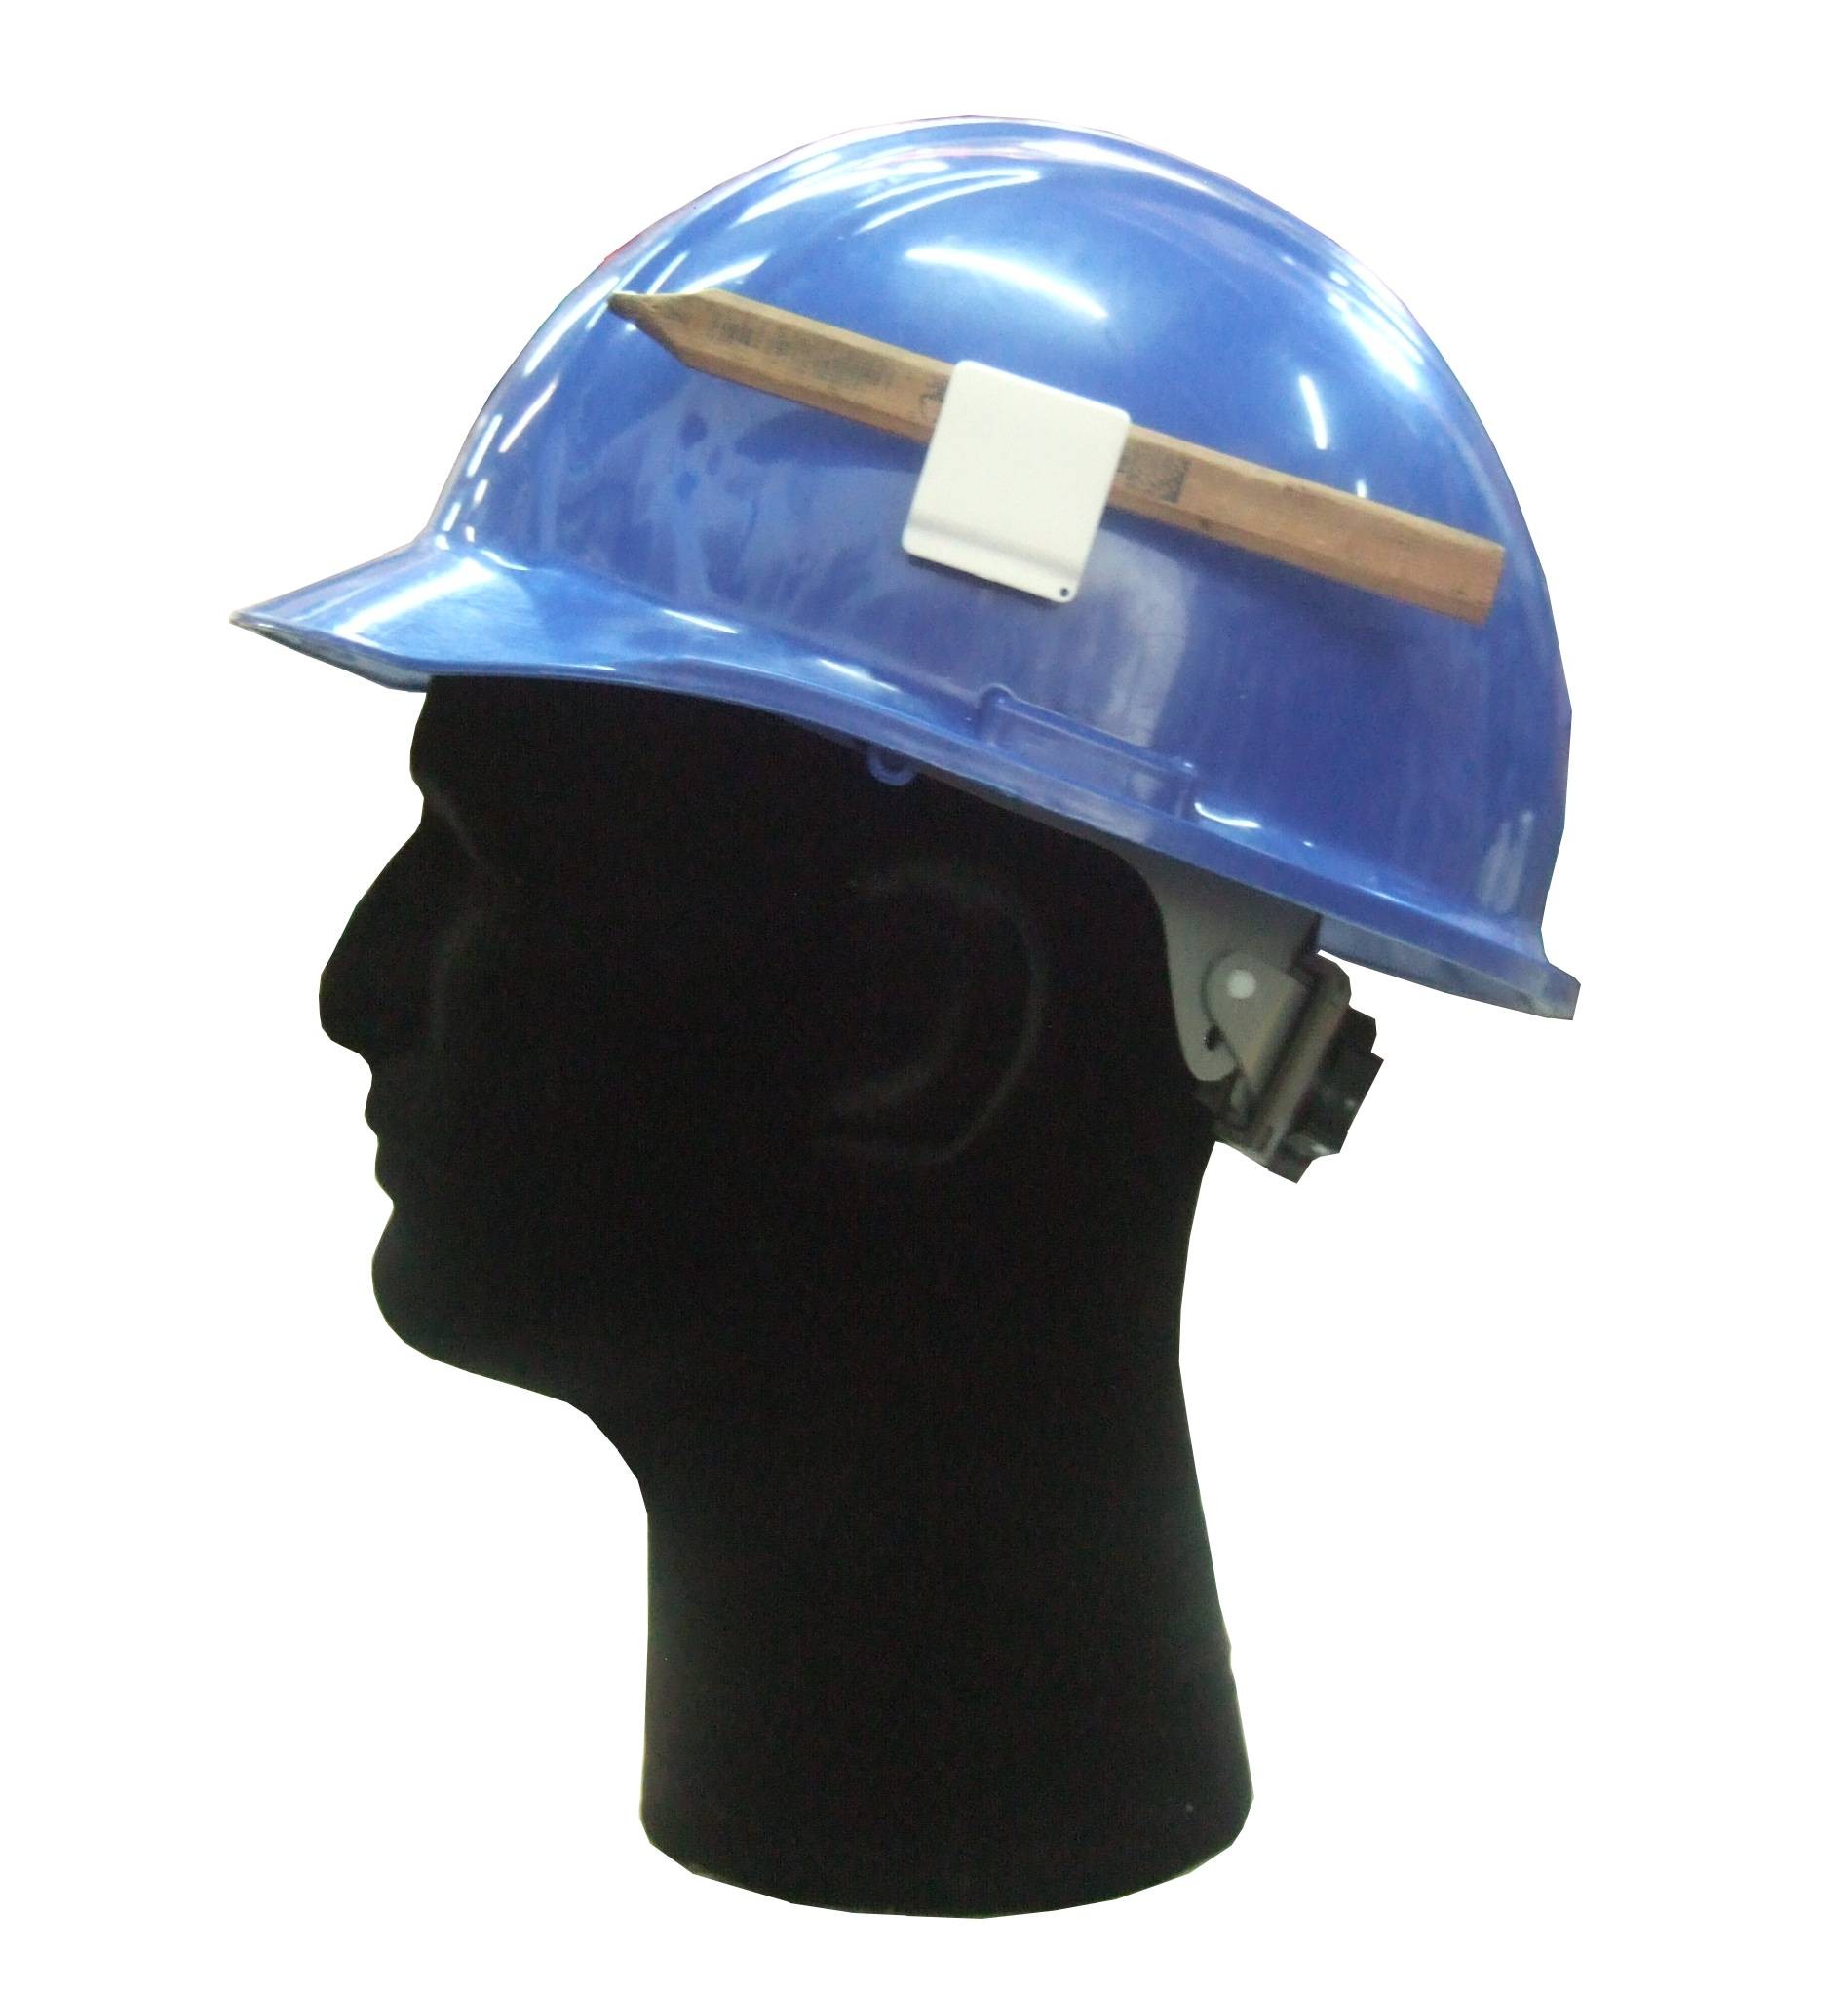 Adhesive pen clip for construction helmets for carpenter from Dentec